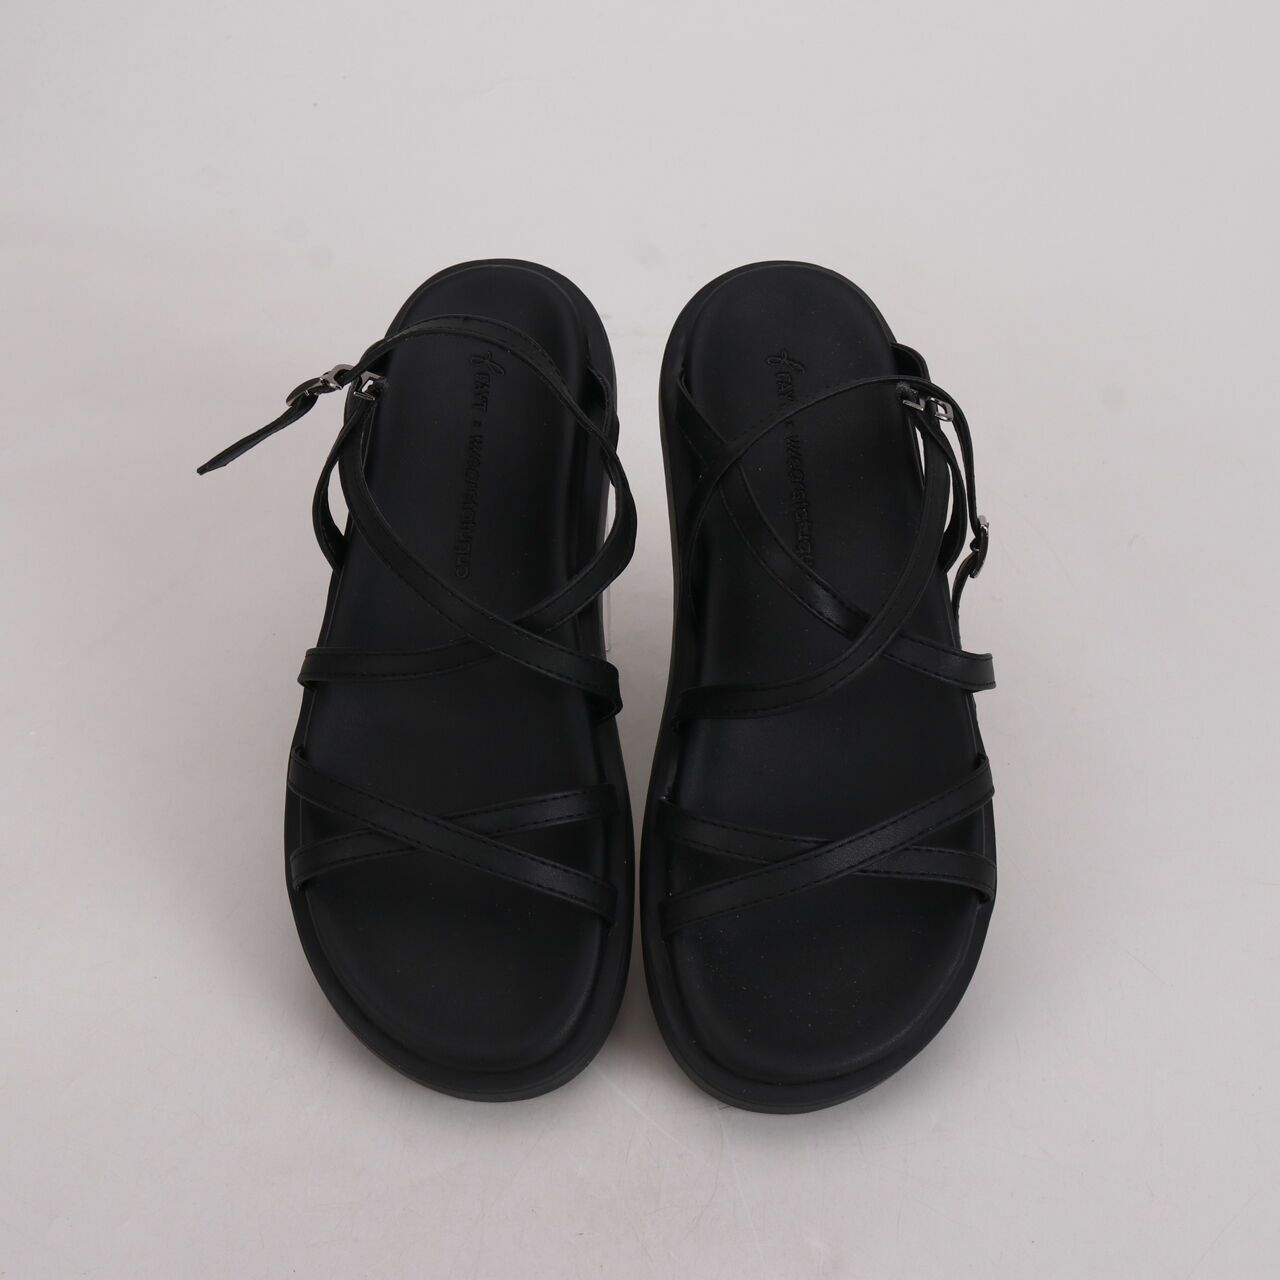 Fayt x Wearstatuquo Black Sandals